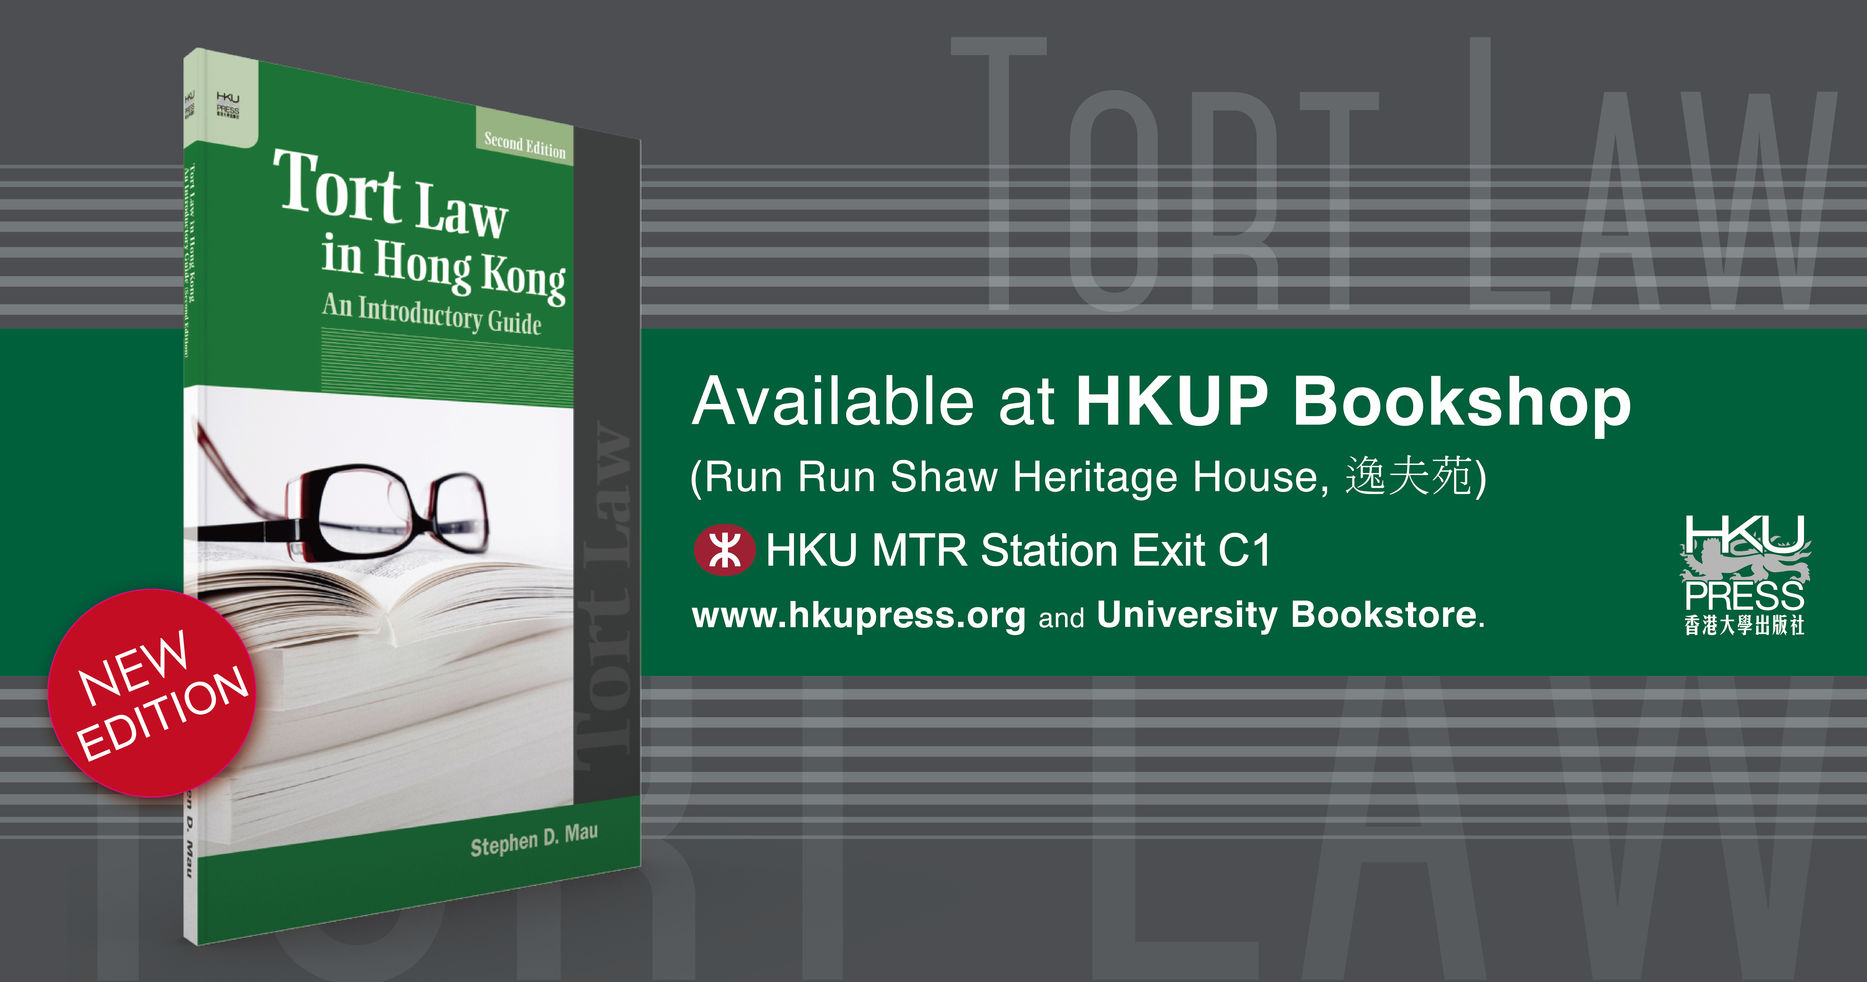 HKU Press New Book Release